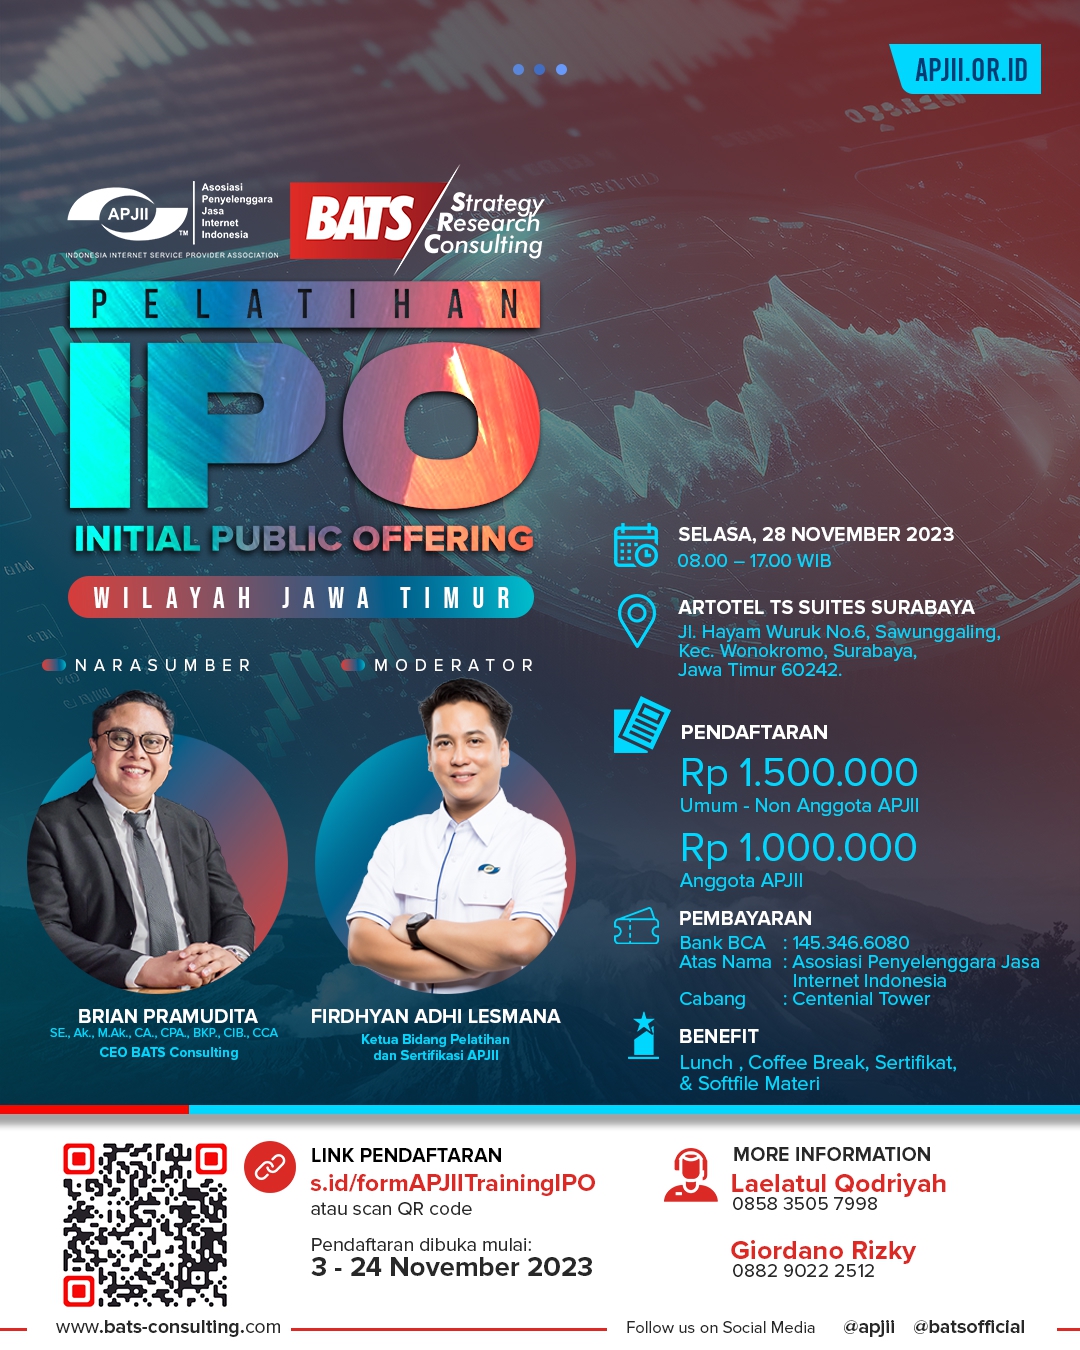 Pelatihan Initial Public Offering (IPO) di Wilayah Jawa Timur